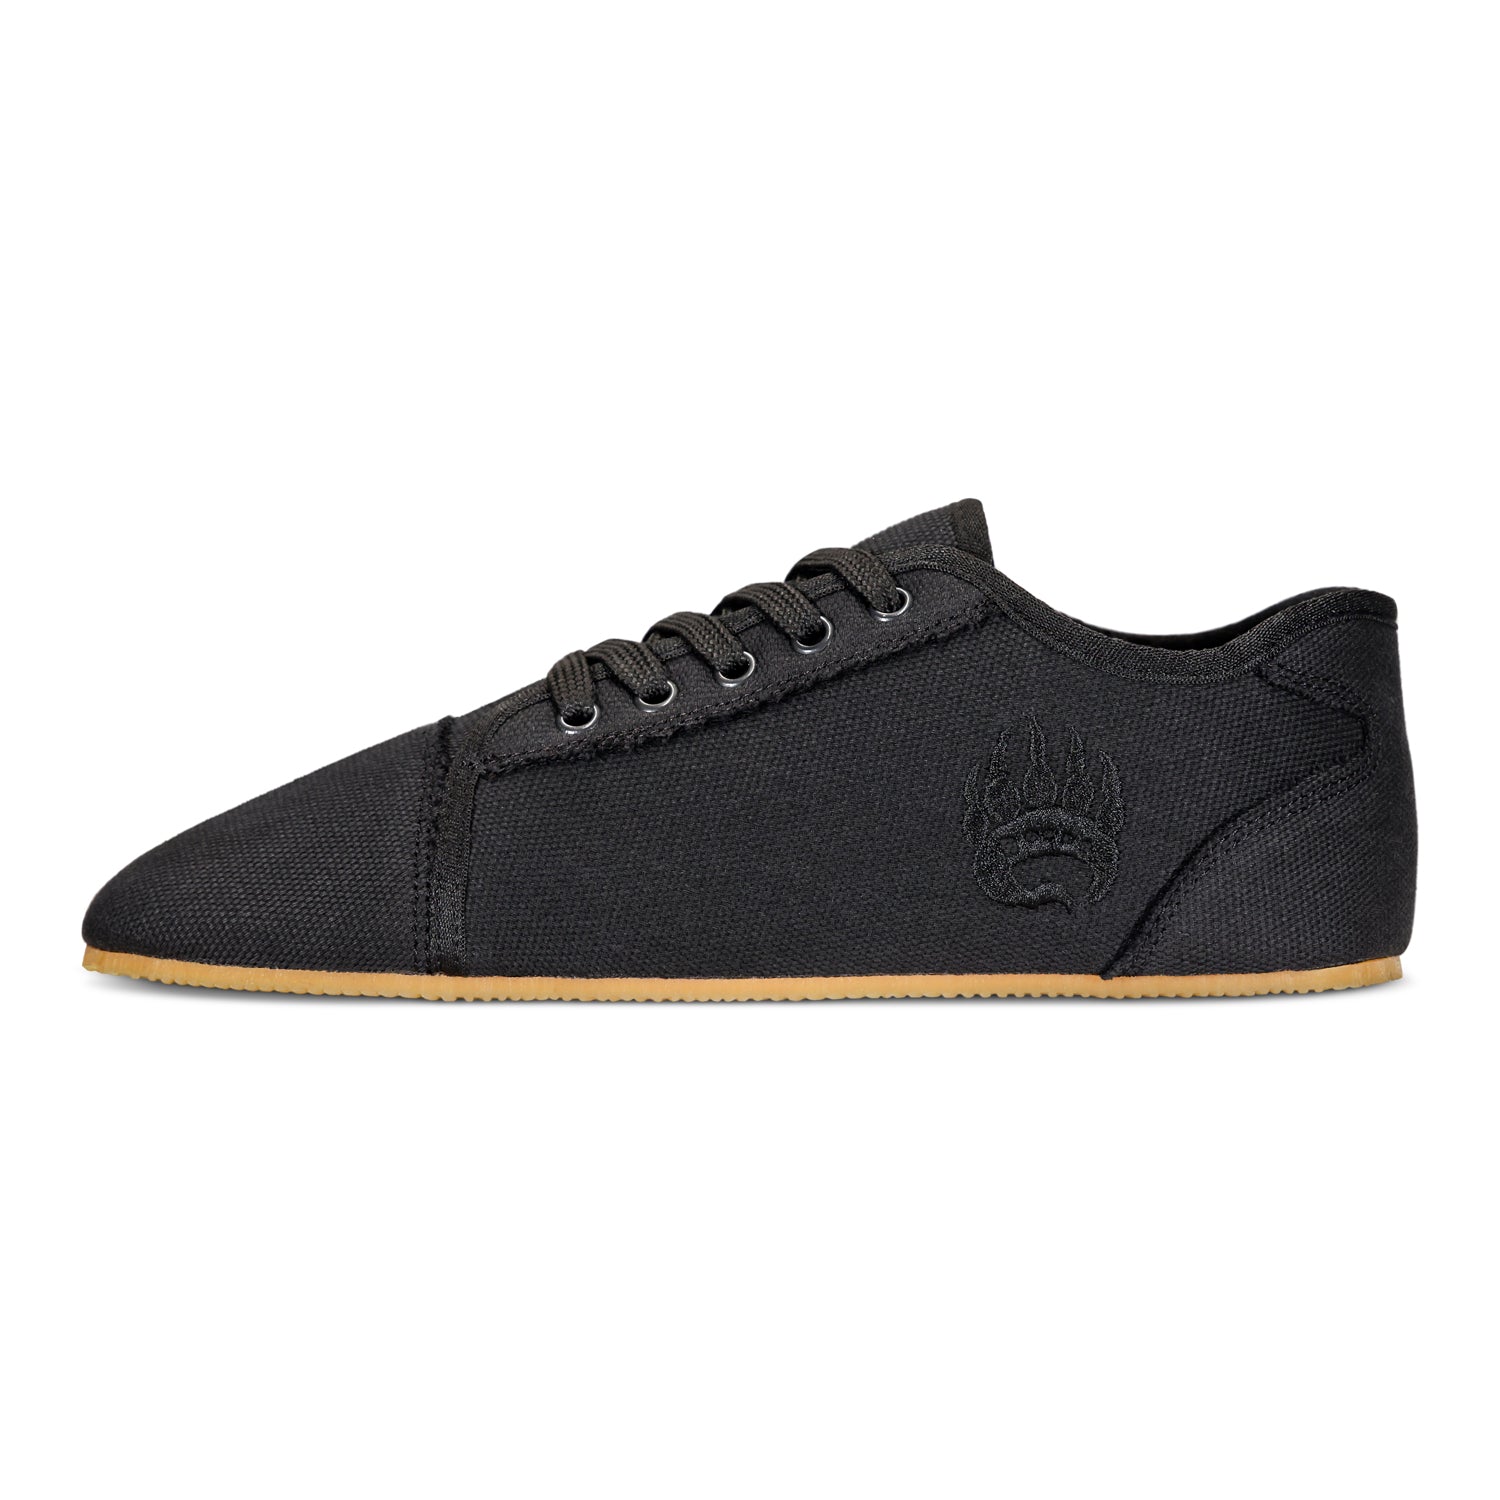 Bearfoot - Ursus C - LT / Black - Shoe